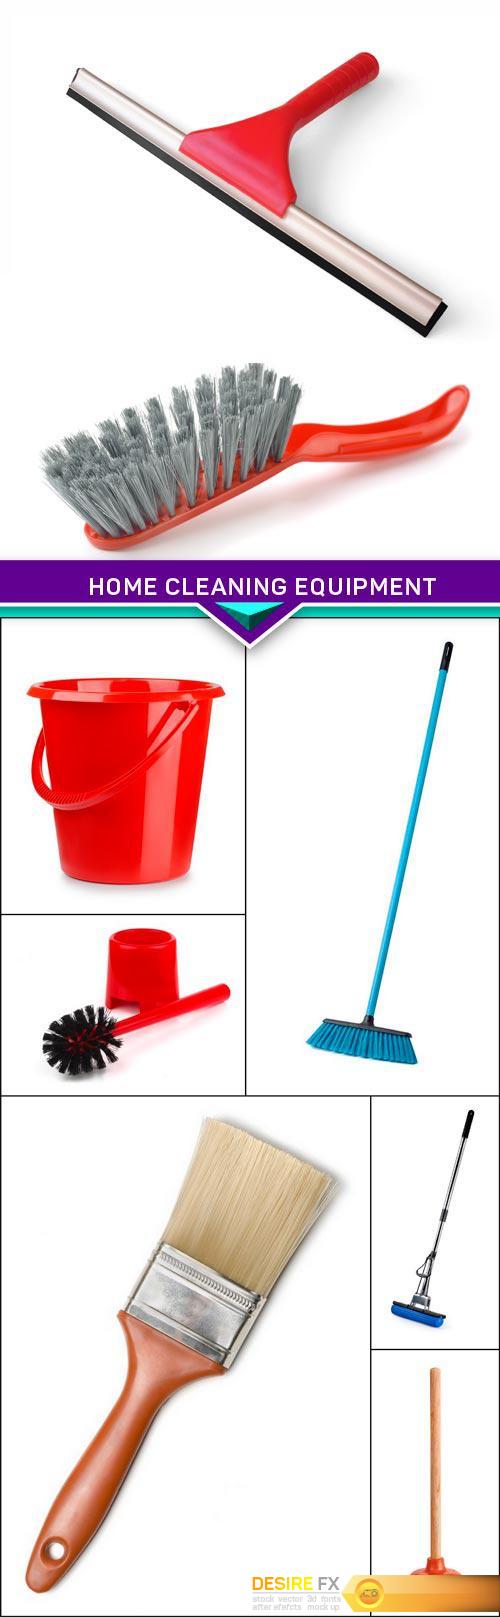 Home cleaning equipment 8X JPEG